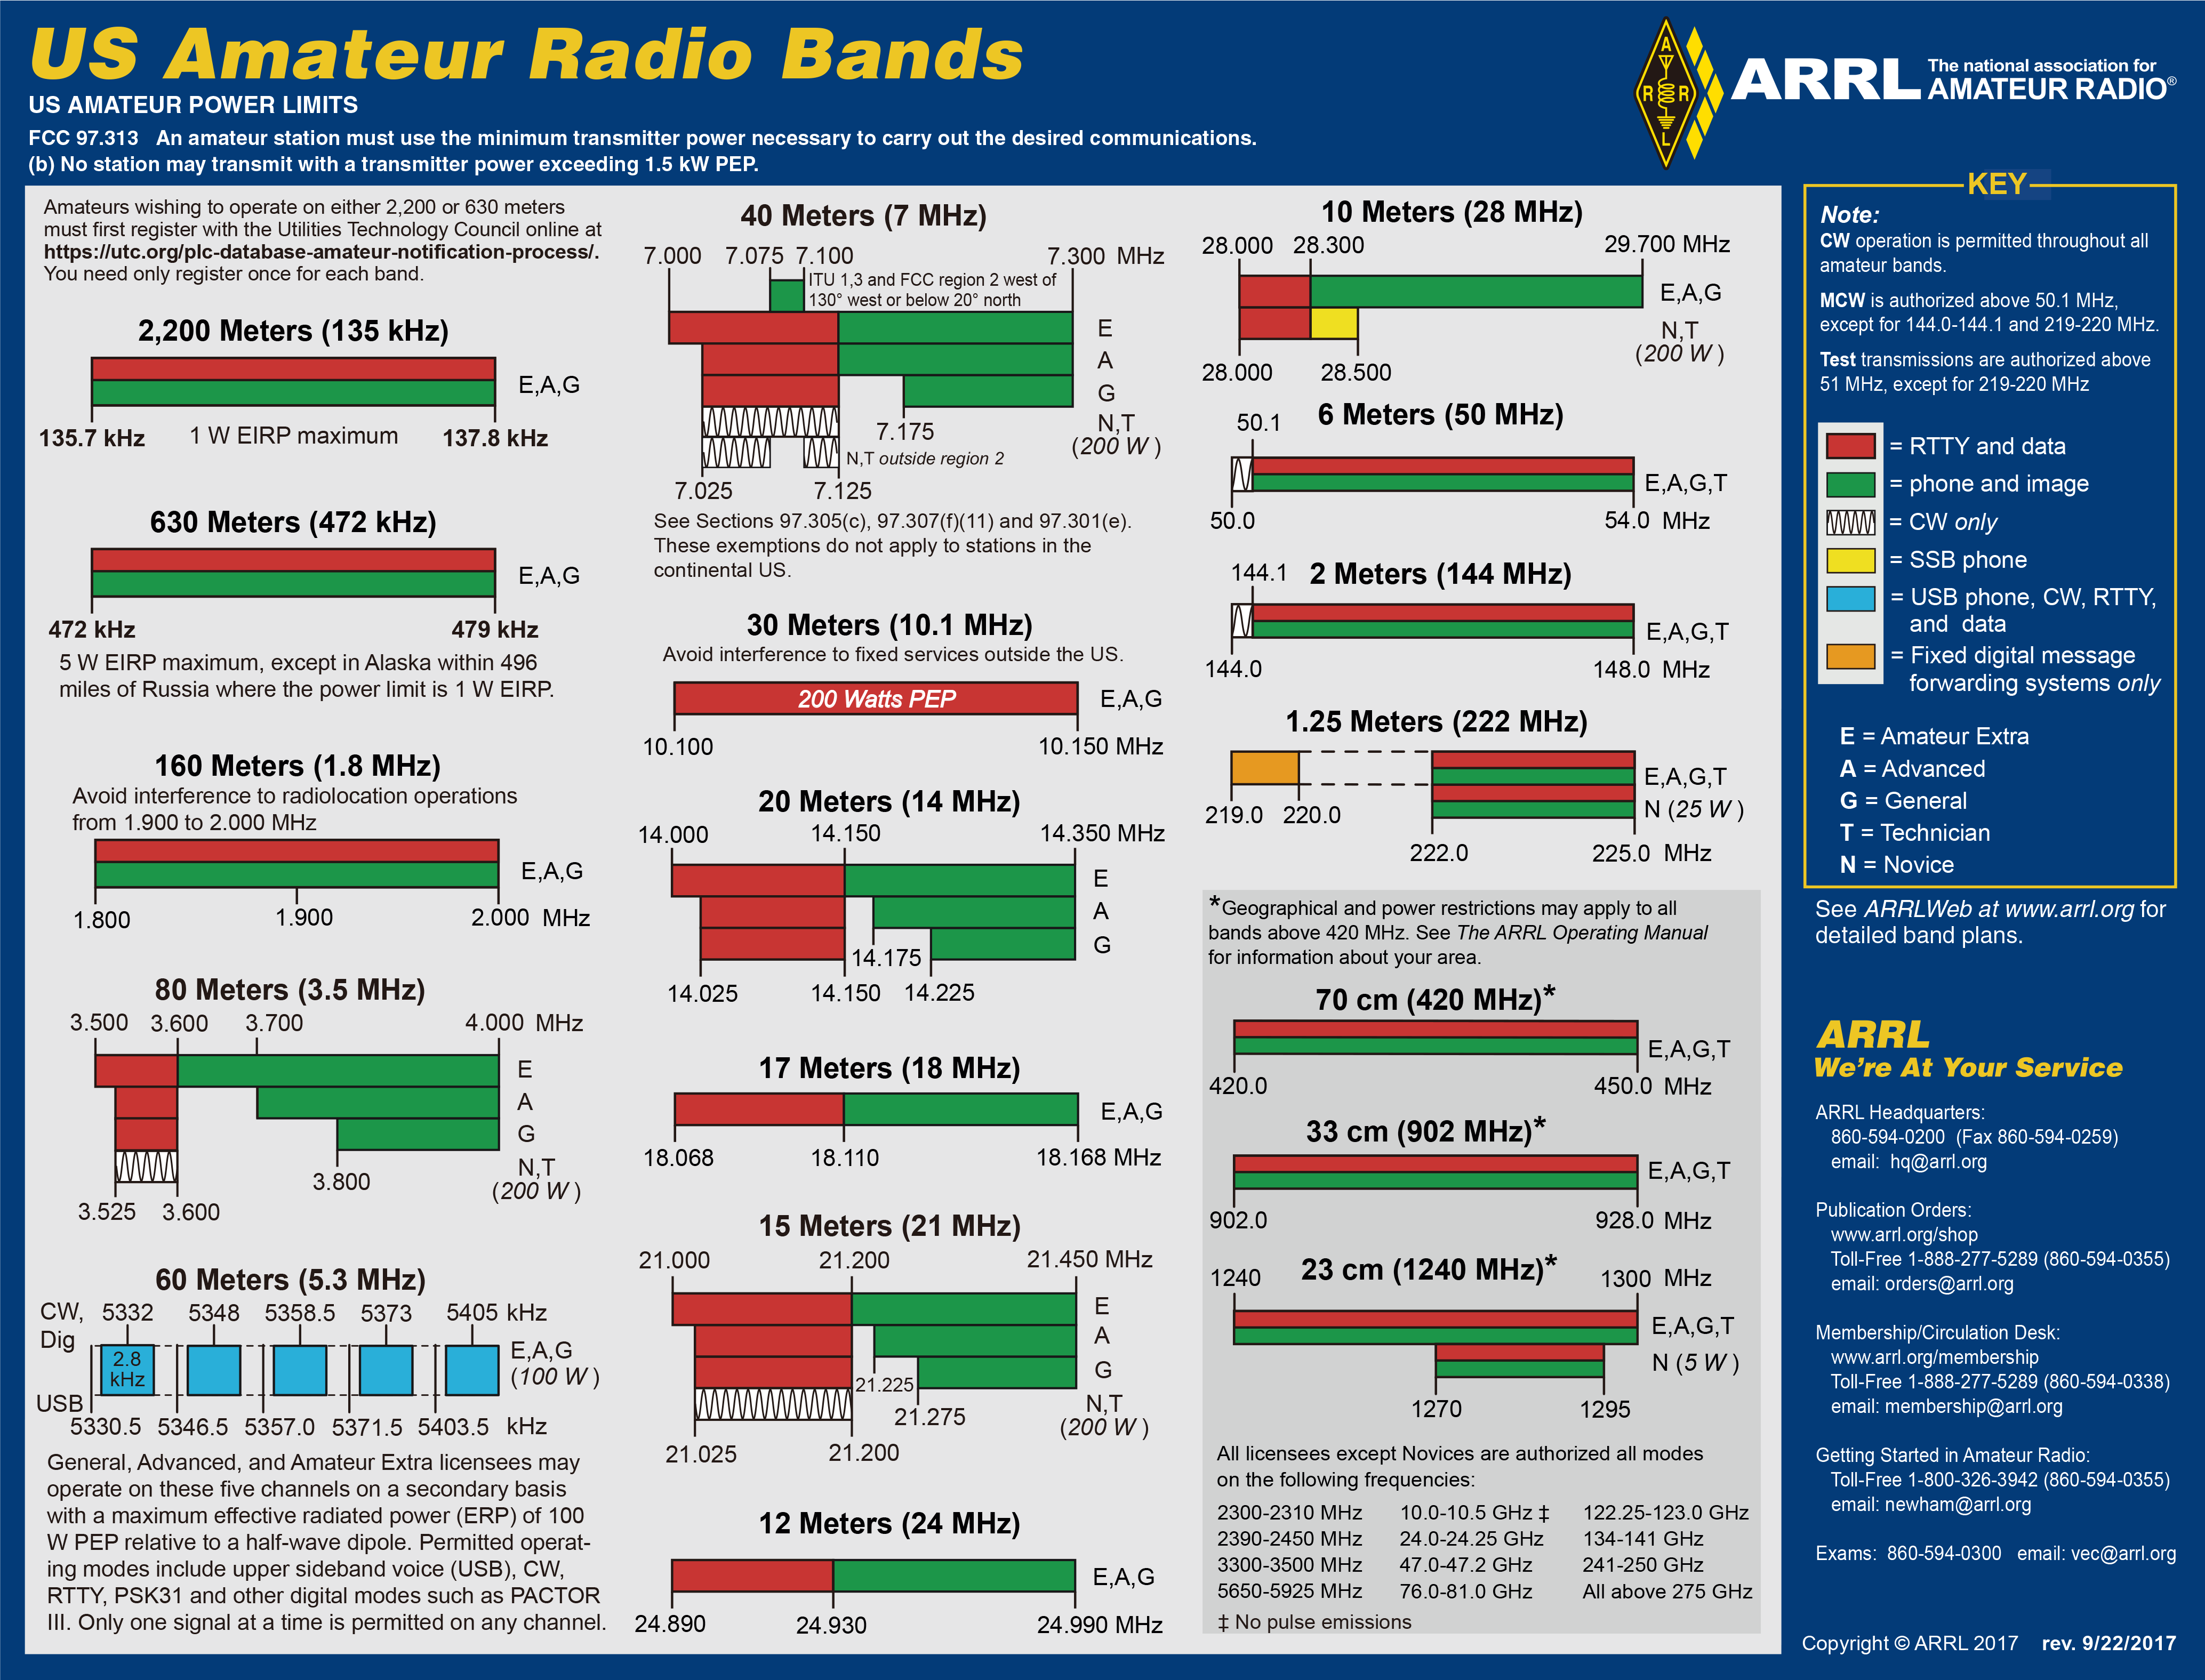 US_Amateur_Radio_Band_Chart_-_11X17_Color.png